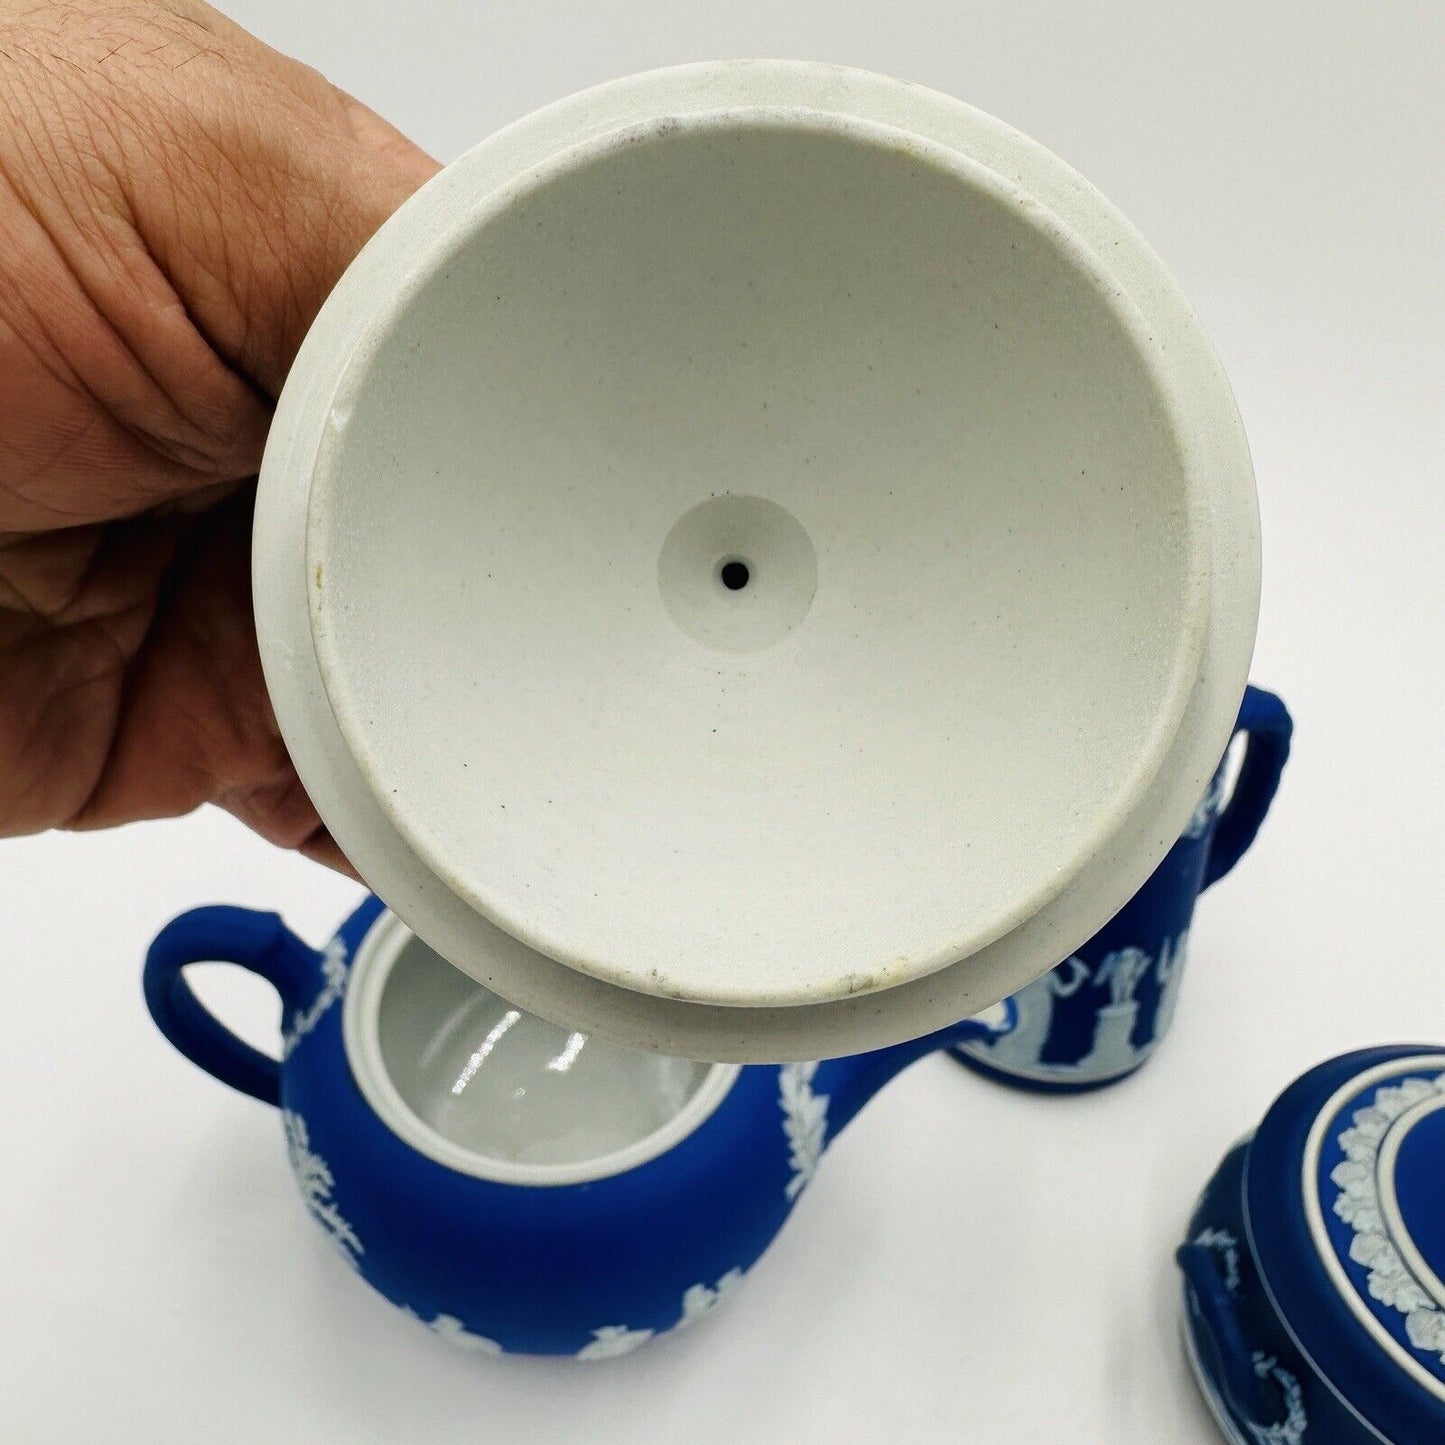 Wedgwood Jasperware Teapot Sugar Bowl Pitcher Dipped Cobalt Blue #43 Set